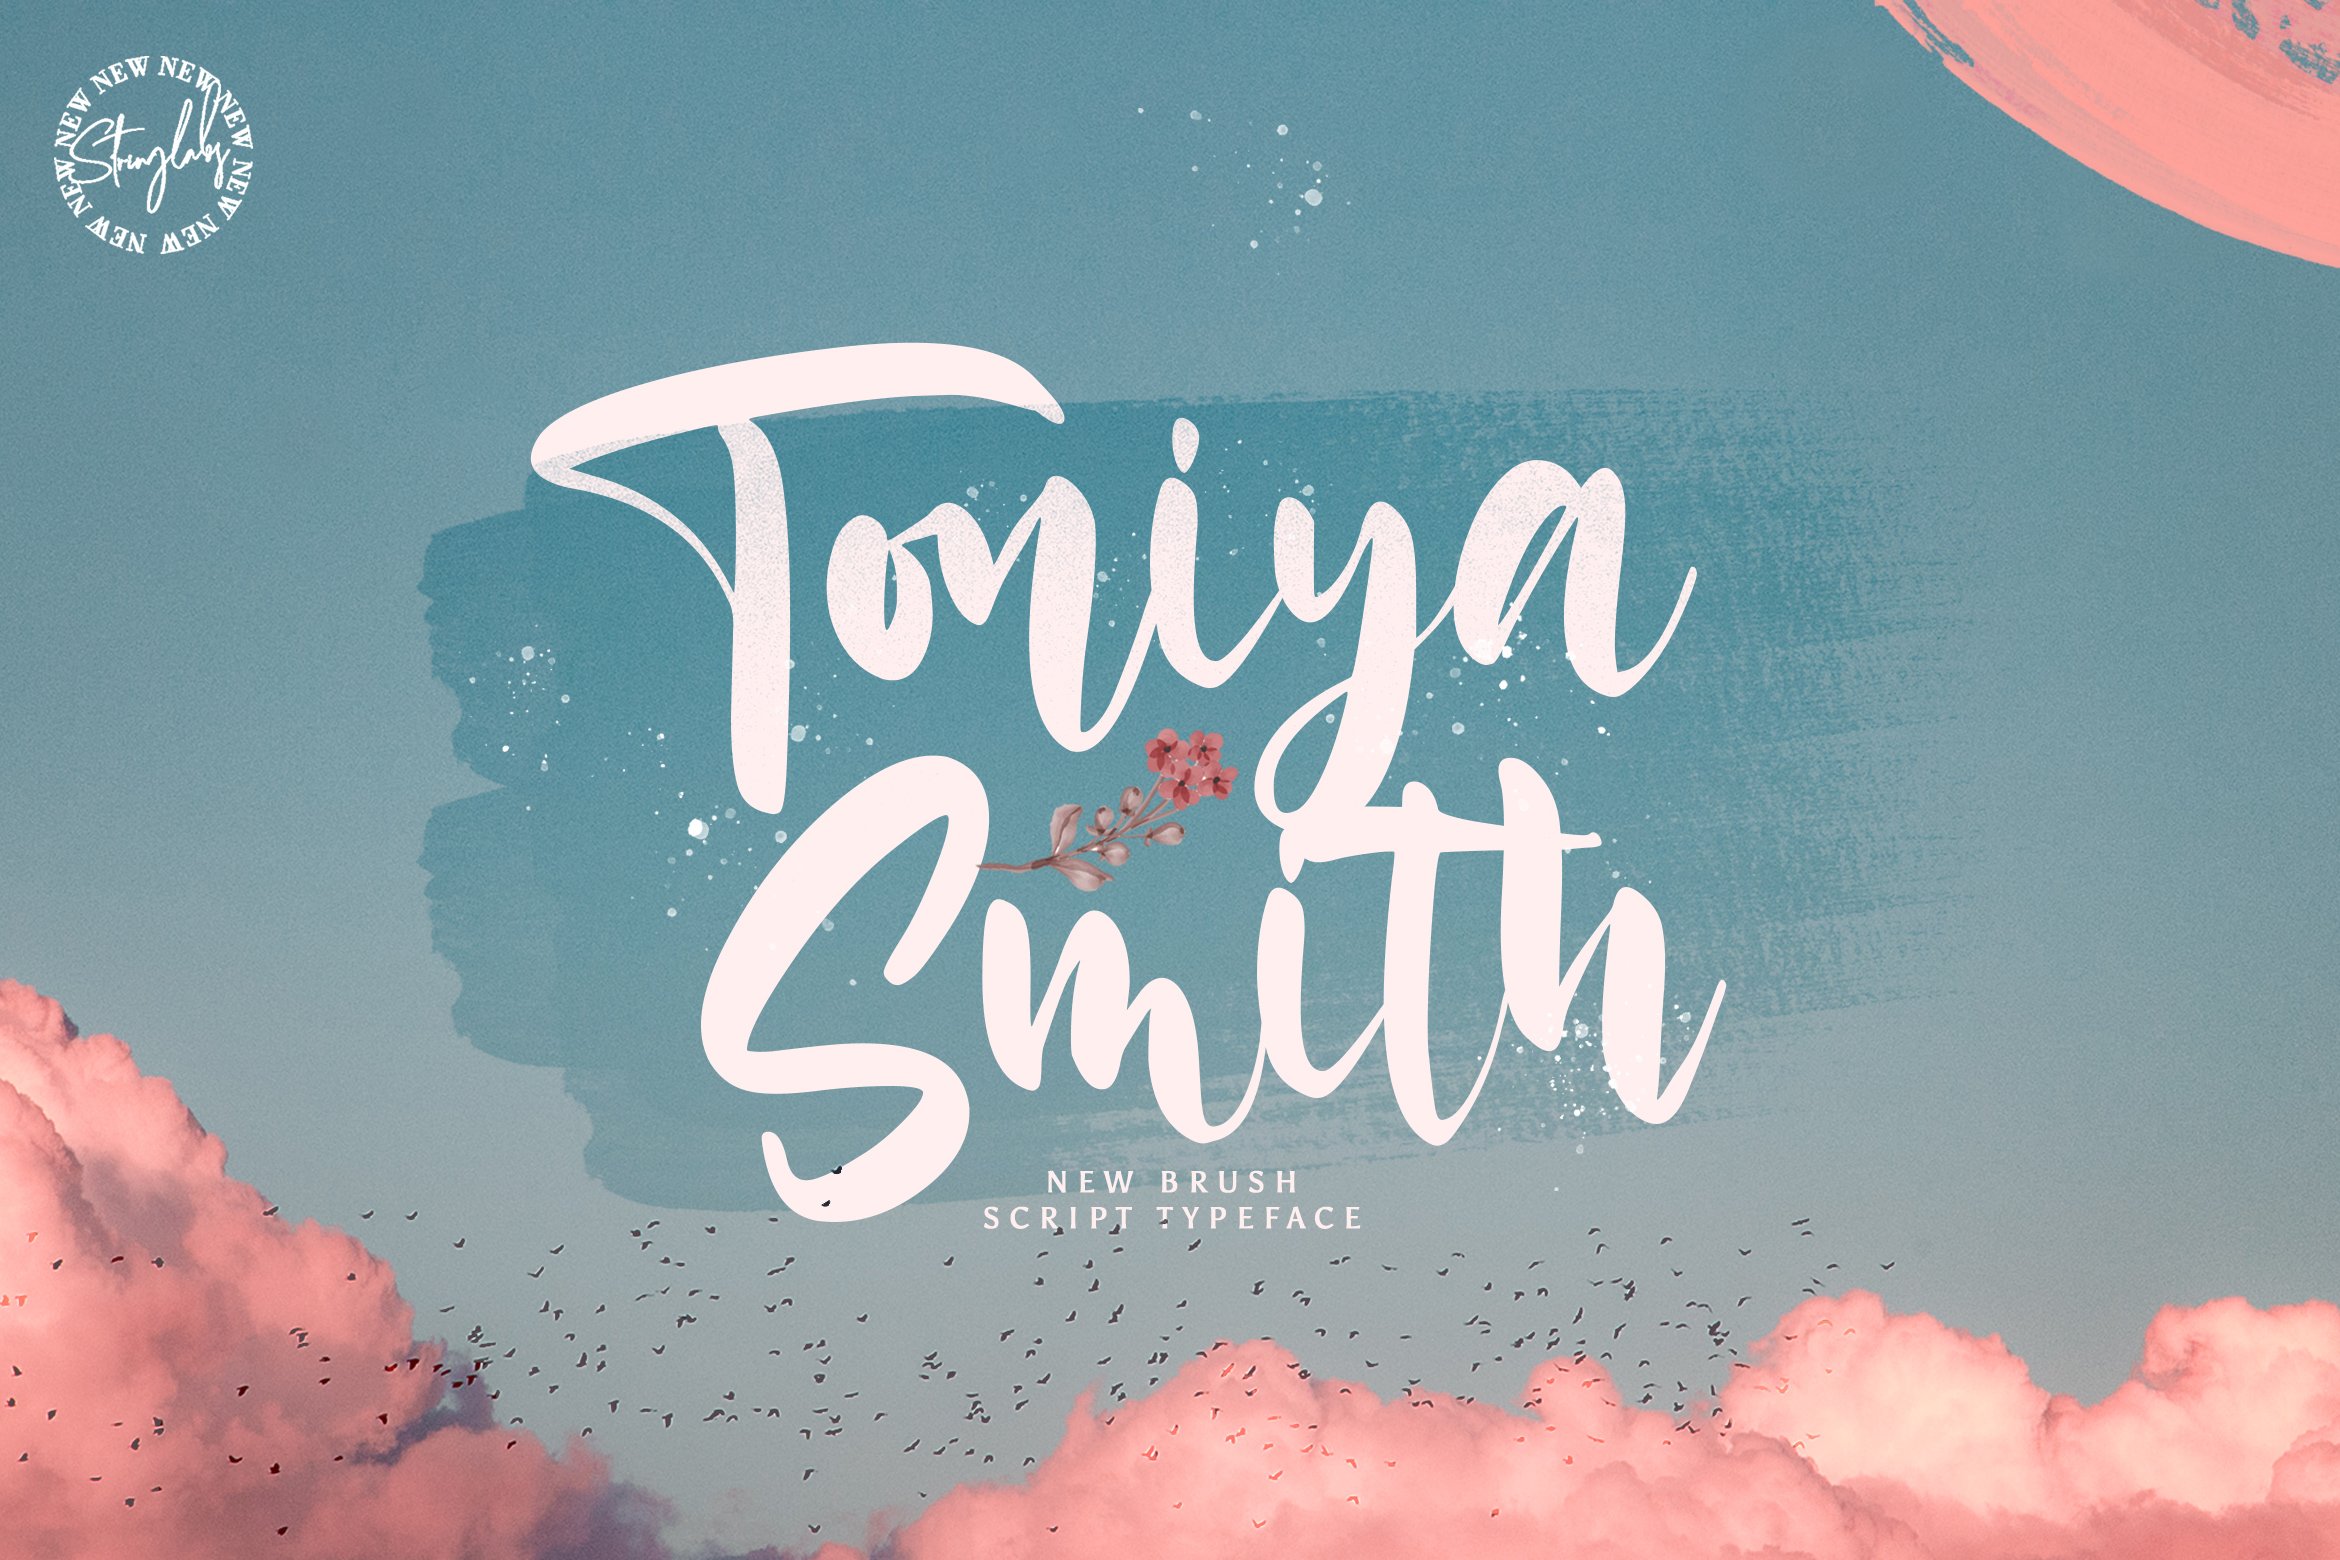 Toniya Smith - Handwritten Font cover image.